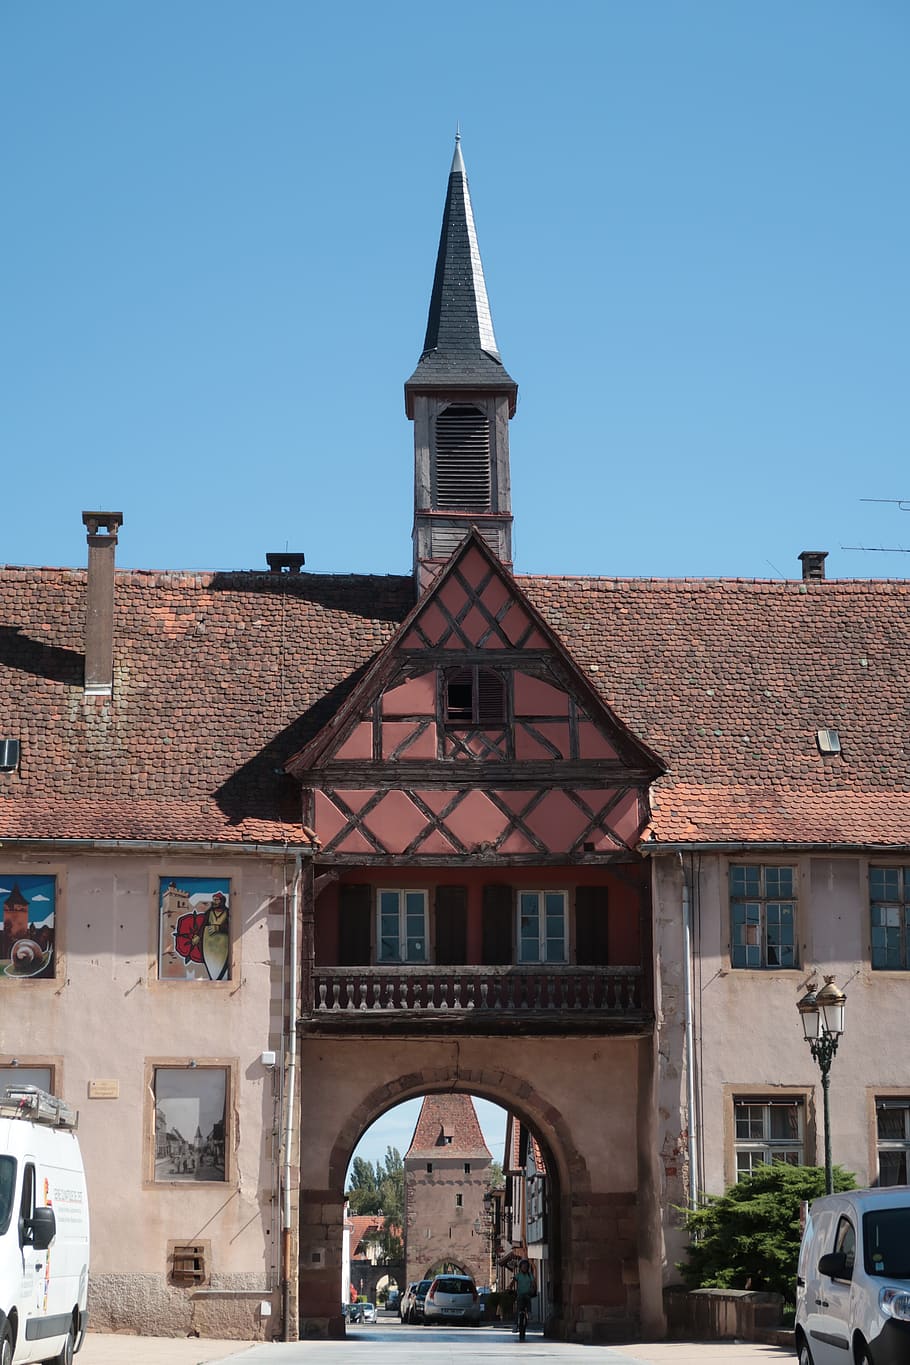 alsace, france, city gate, truss, historic center, architecture, house, historically, fachwerkhaus, village